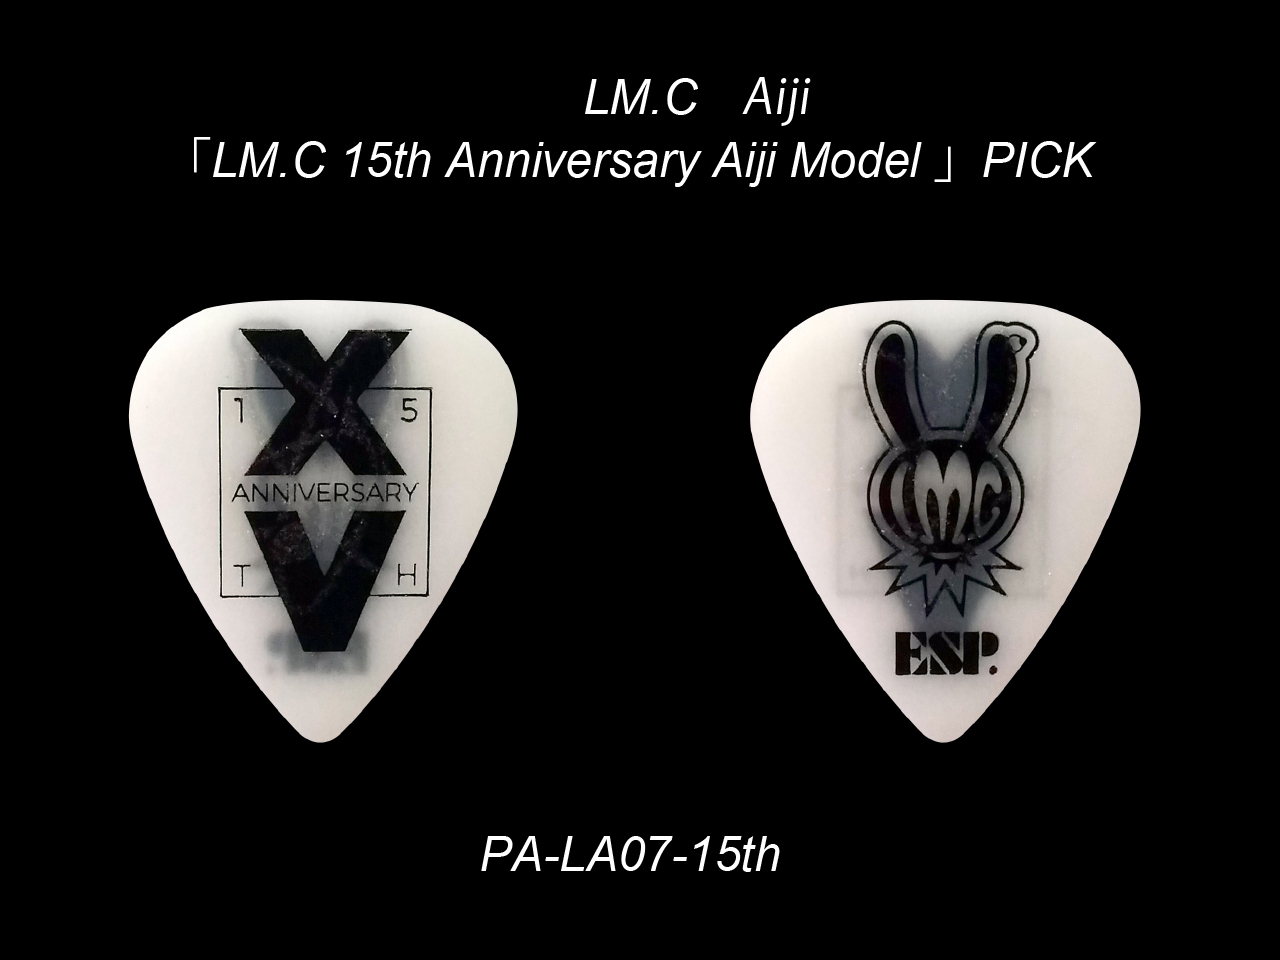 ESP(イーエスピー) Artist Pick Series PA-LA07-15th LM.C 15th Anniversary Aiji Model ピック (LM.C Aijiモデル)